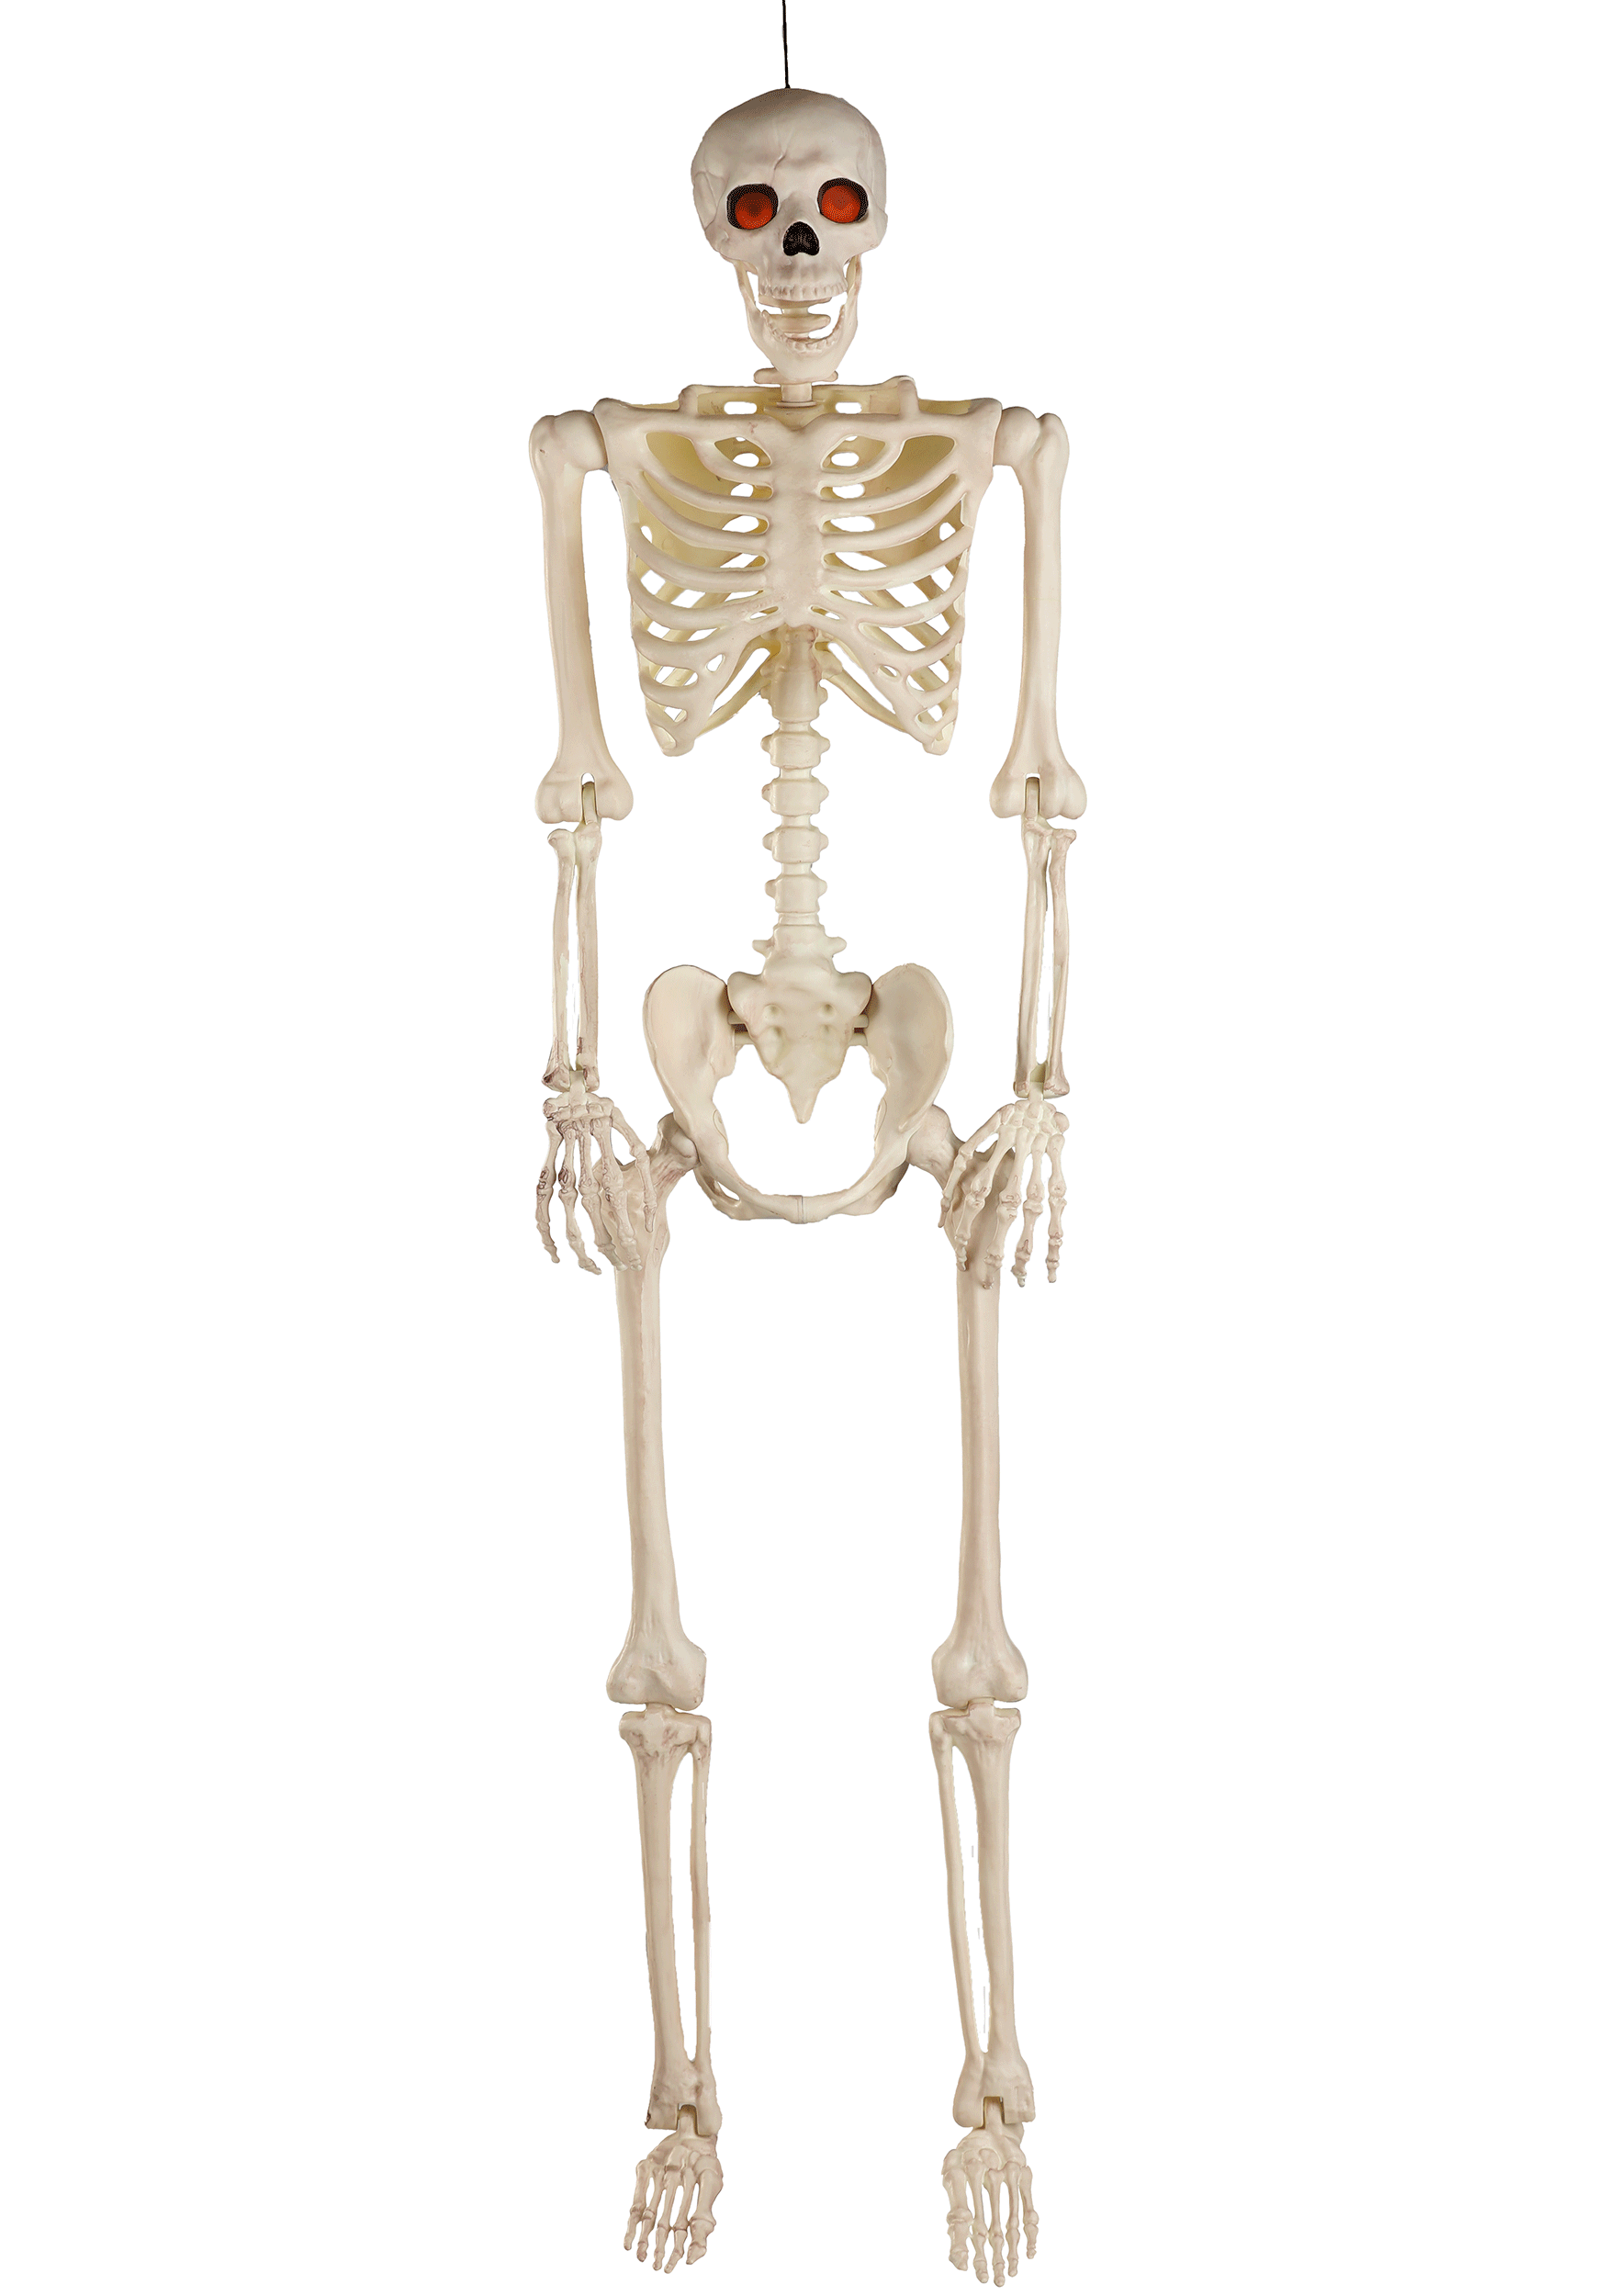 5FT Deluxe Flaming Light Up Eyes & Talking Skeleton Halloween Prop , Skeleton Decorations